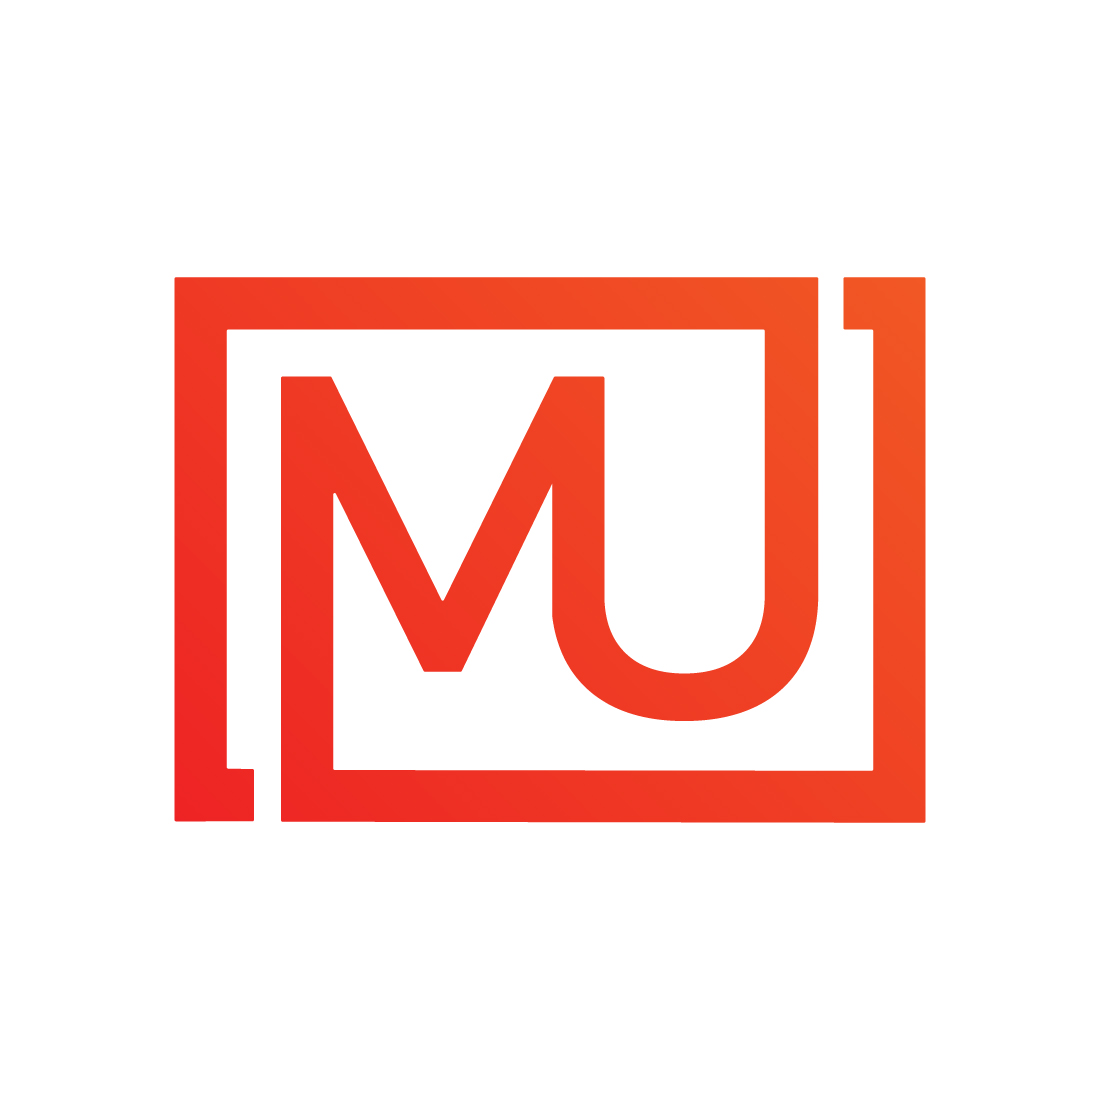 Initials MU letter logo design vector images MU logo orange color icon design UM logo design template vector icon illustration UM Premium vector best company identity preview image.